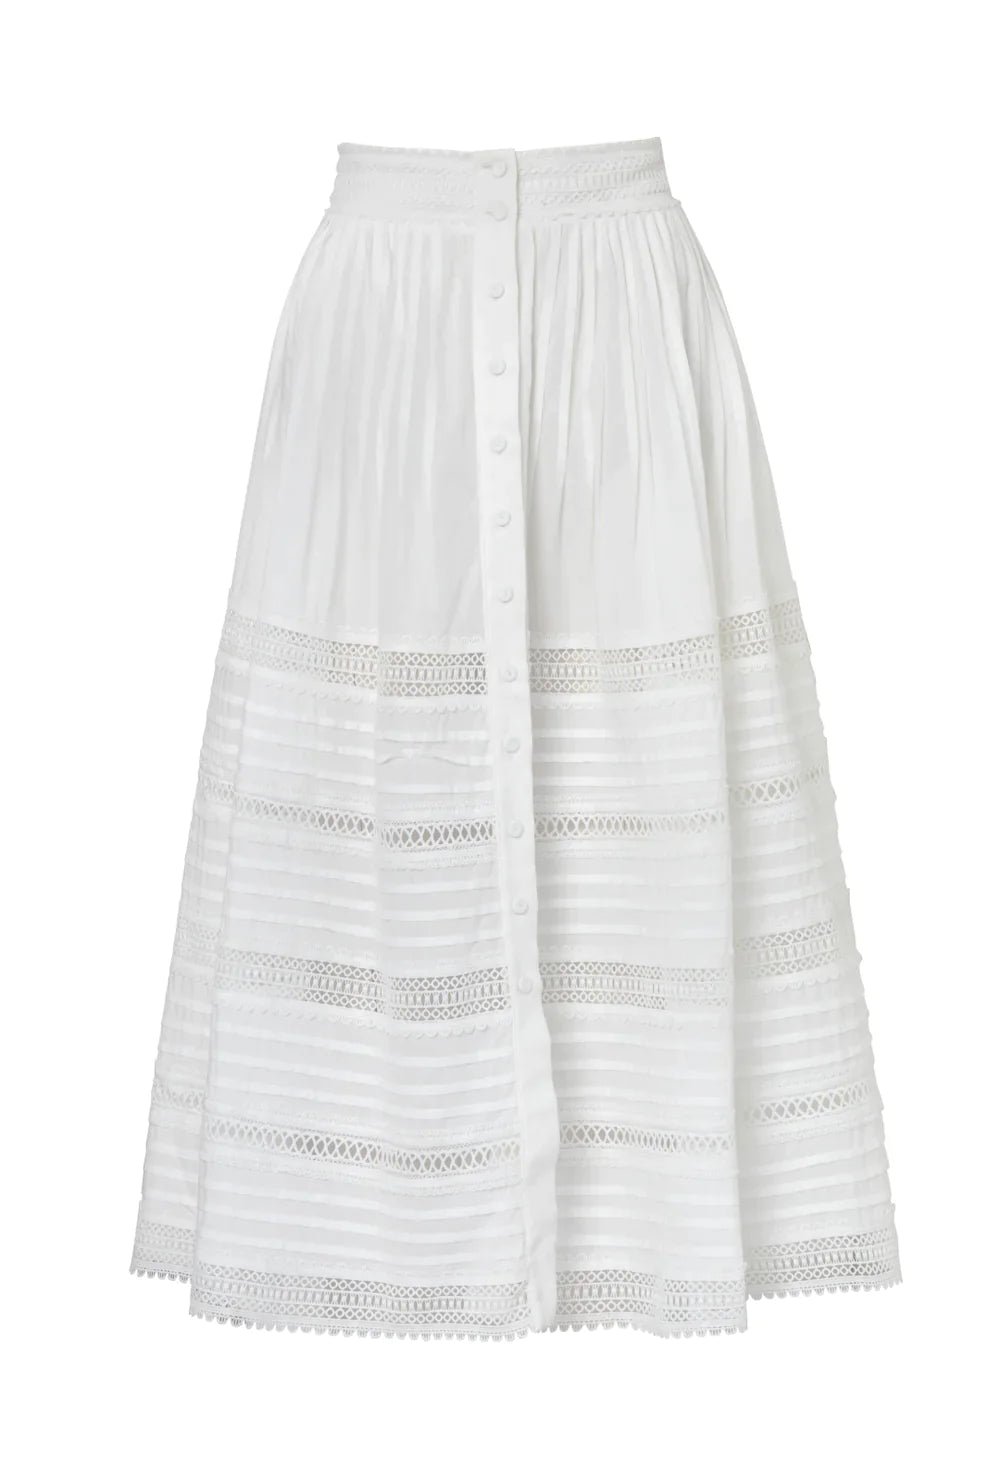 Waimari Camila Midi Skirt - Premium long skirt from Marina St Barth - Just $395! Shop now at Marina St Barth